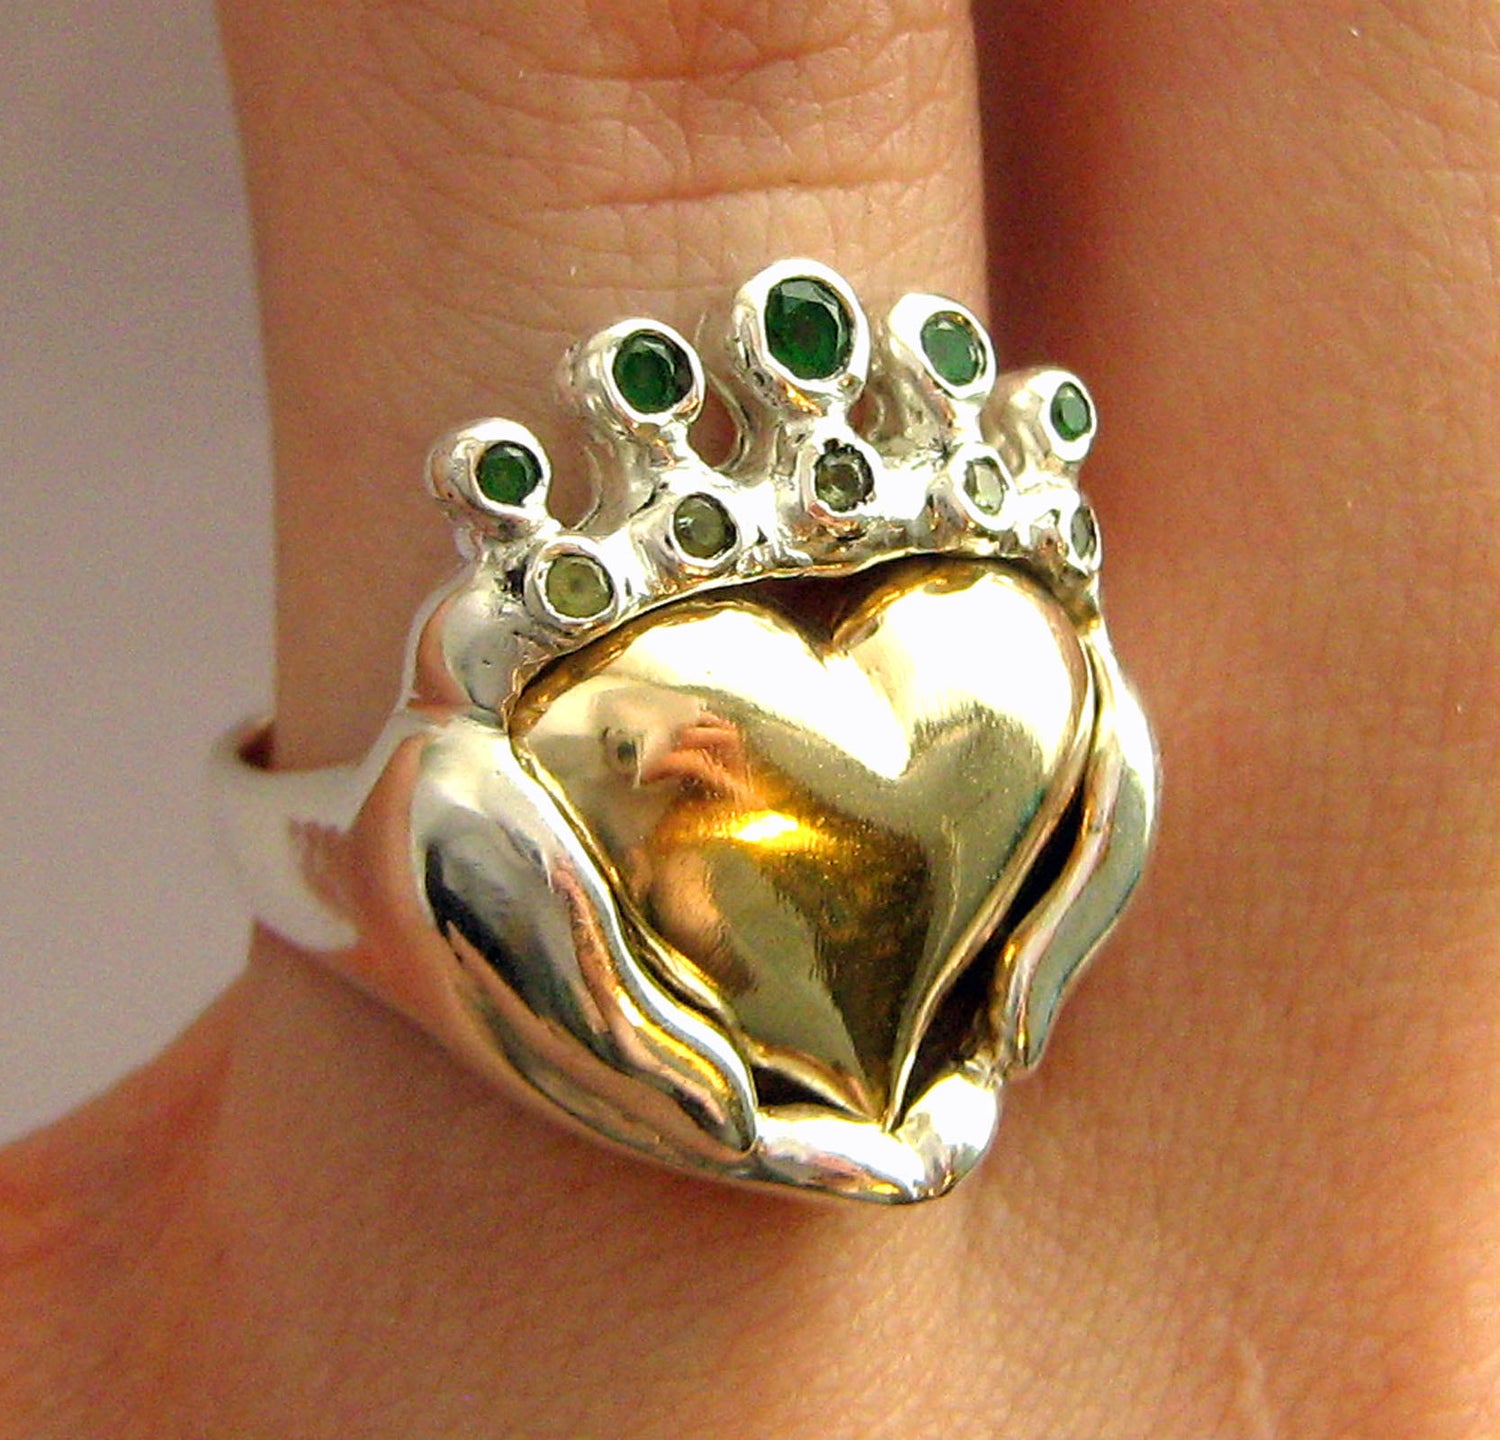 Two Tone Claddagh Wedding Engagement Family Ring Handmade Gold silver Irish Jewelry White Yellow Gold Platinum Statement Modern 50 51